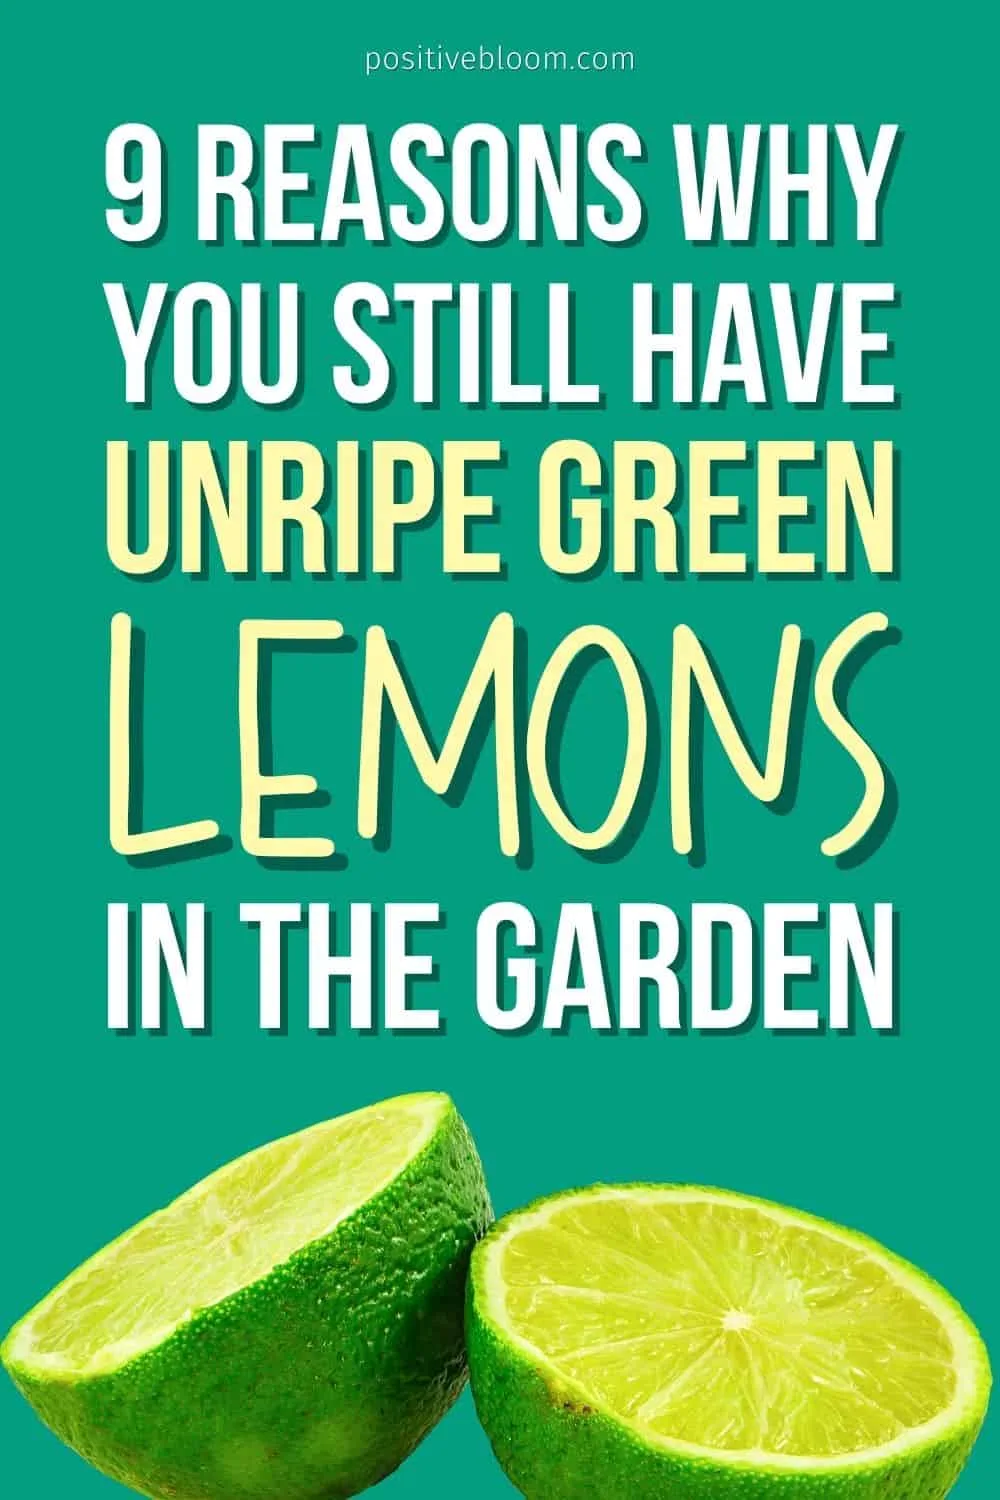 9 Reasons Why You Still Have Unripe Green Lemons In The Garden Pinterest